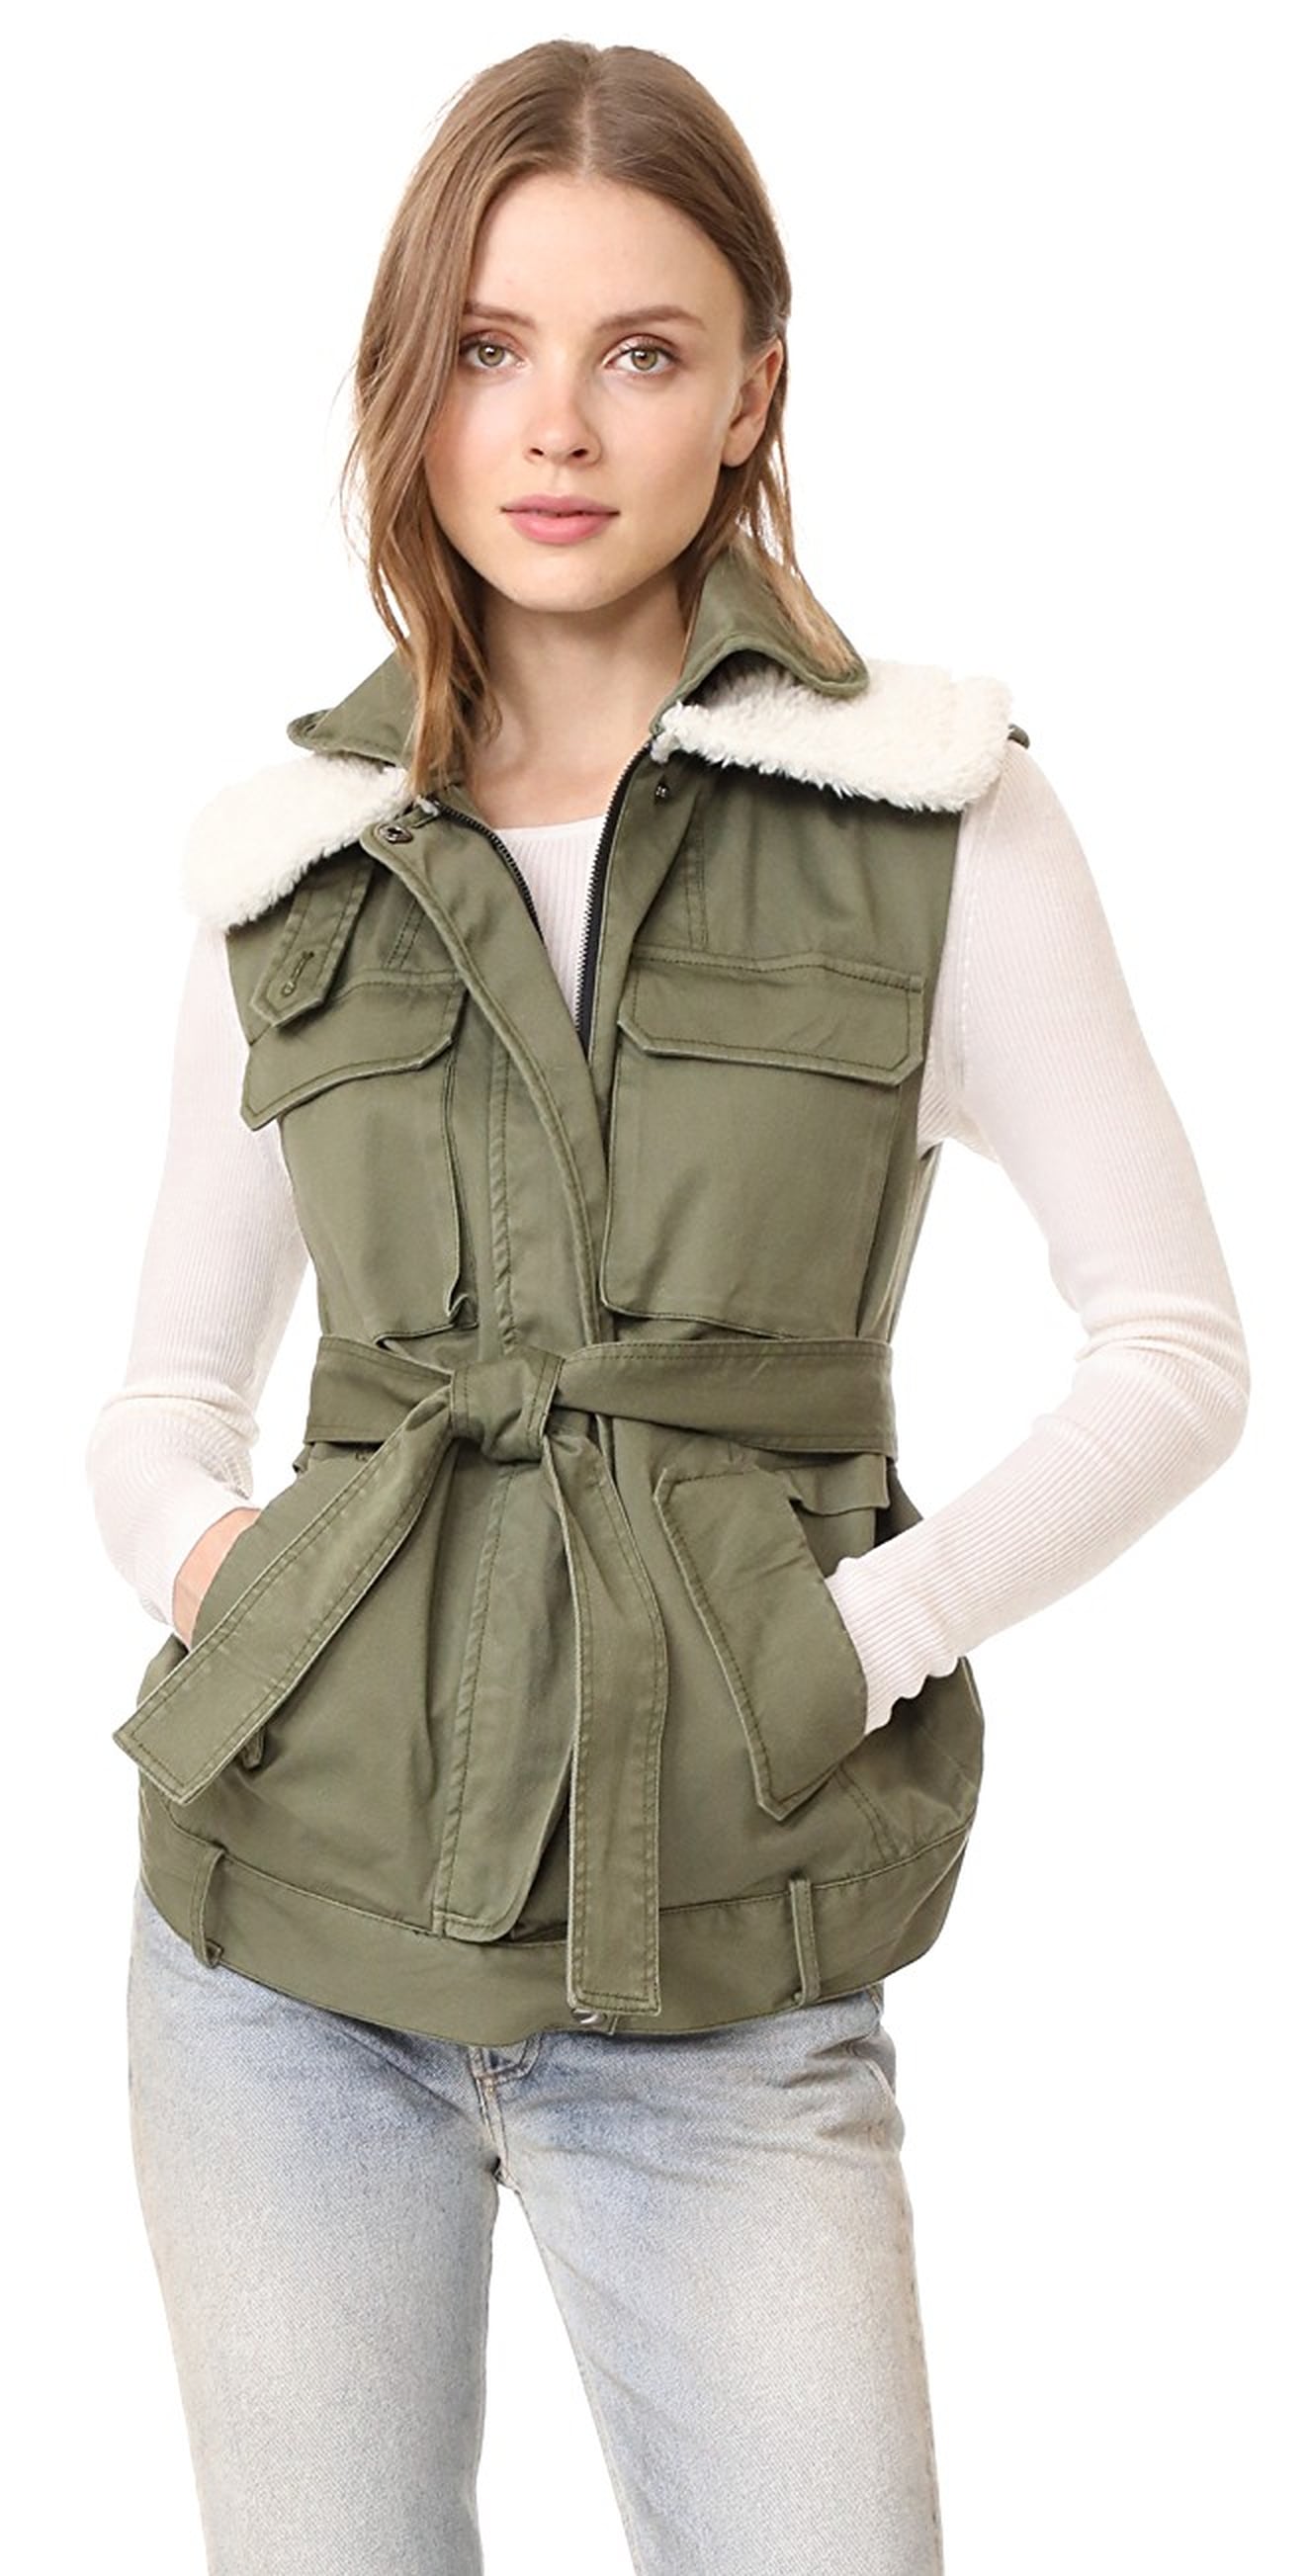 How to Wear a Vest Jacket | POPSUGAR Fashion